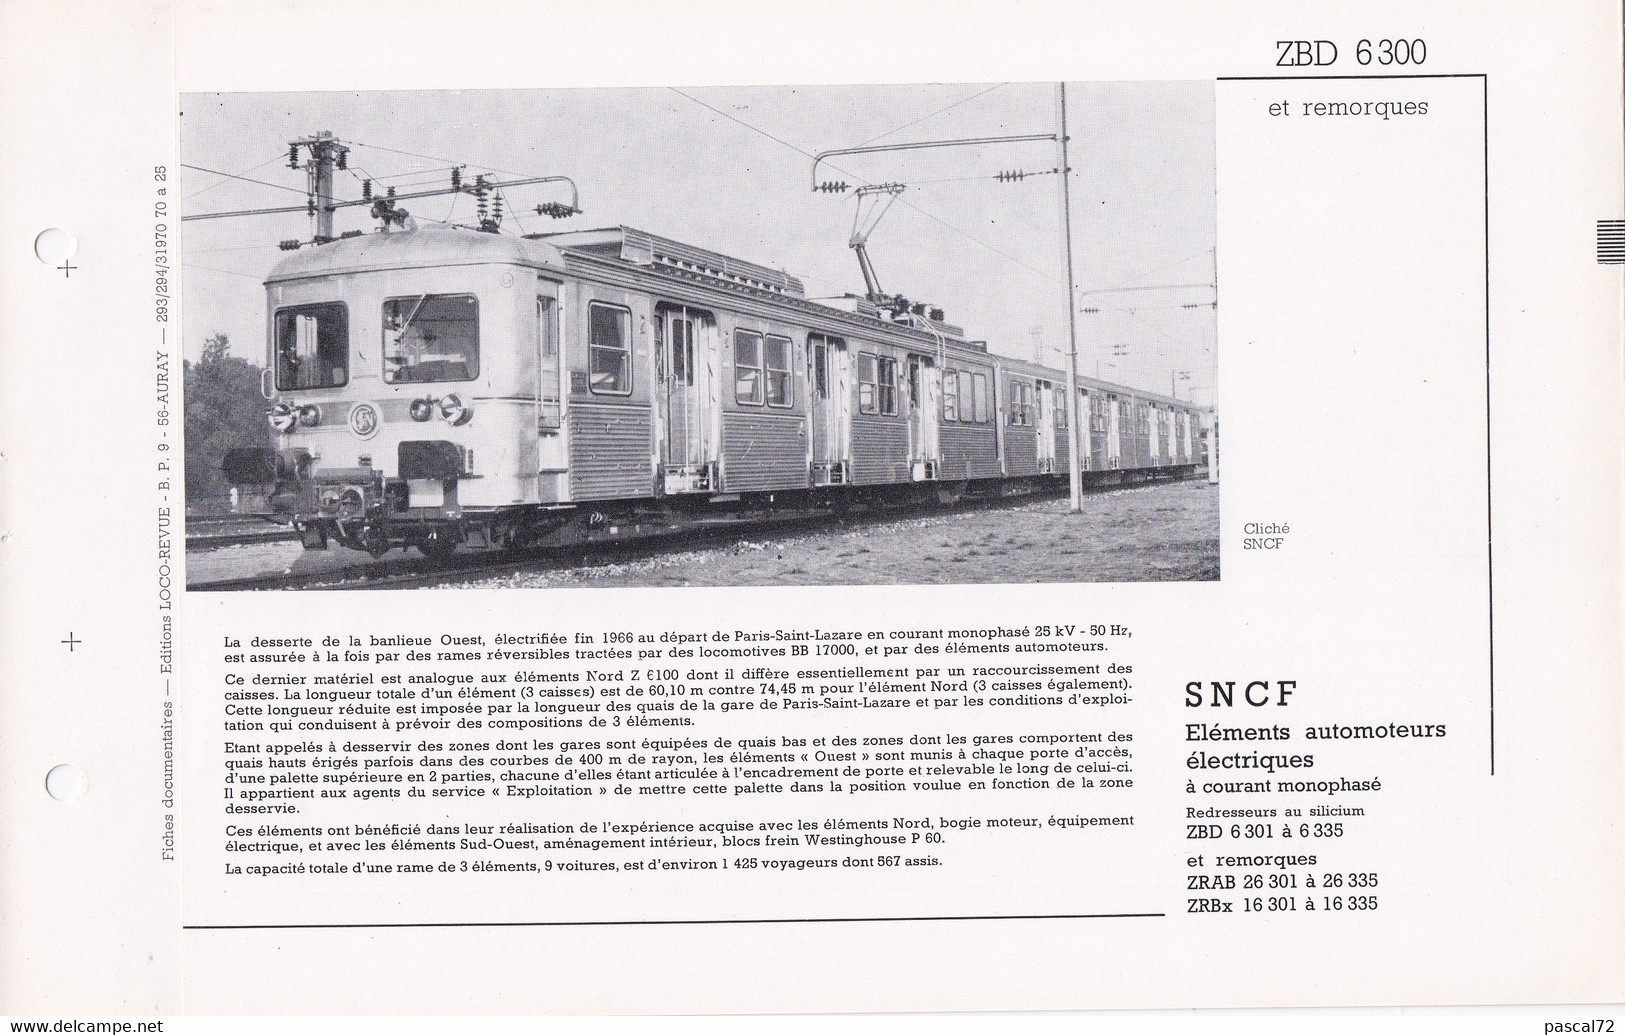 ZDB 6300 FICHE DOCUMENTAIRE DOUBLE LOCO REVUE N° 293/294 MARS 1970 - French